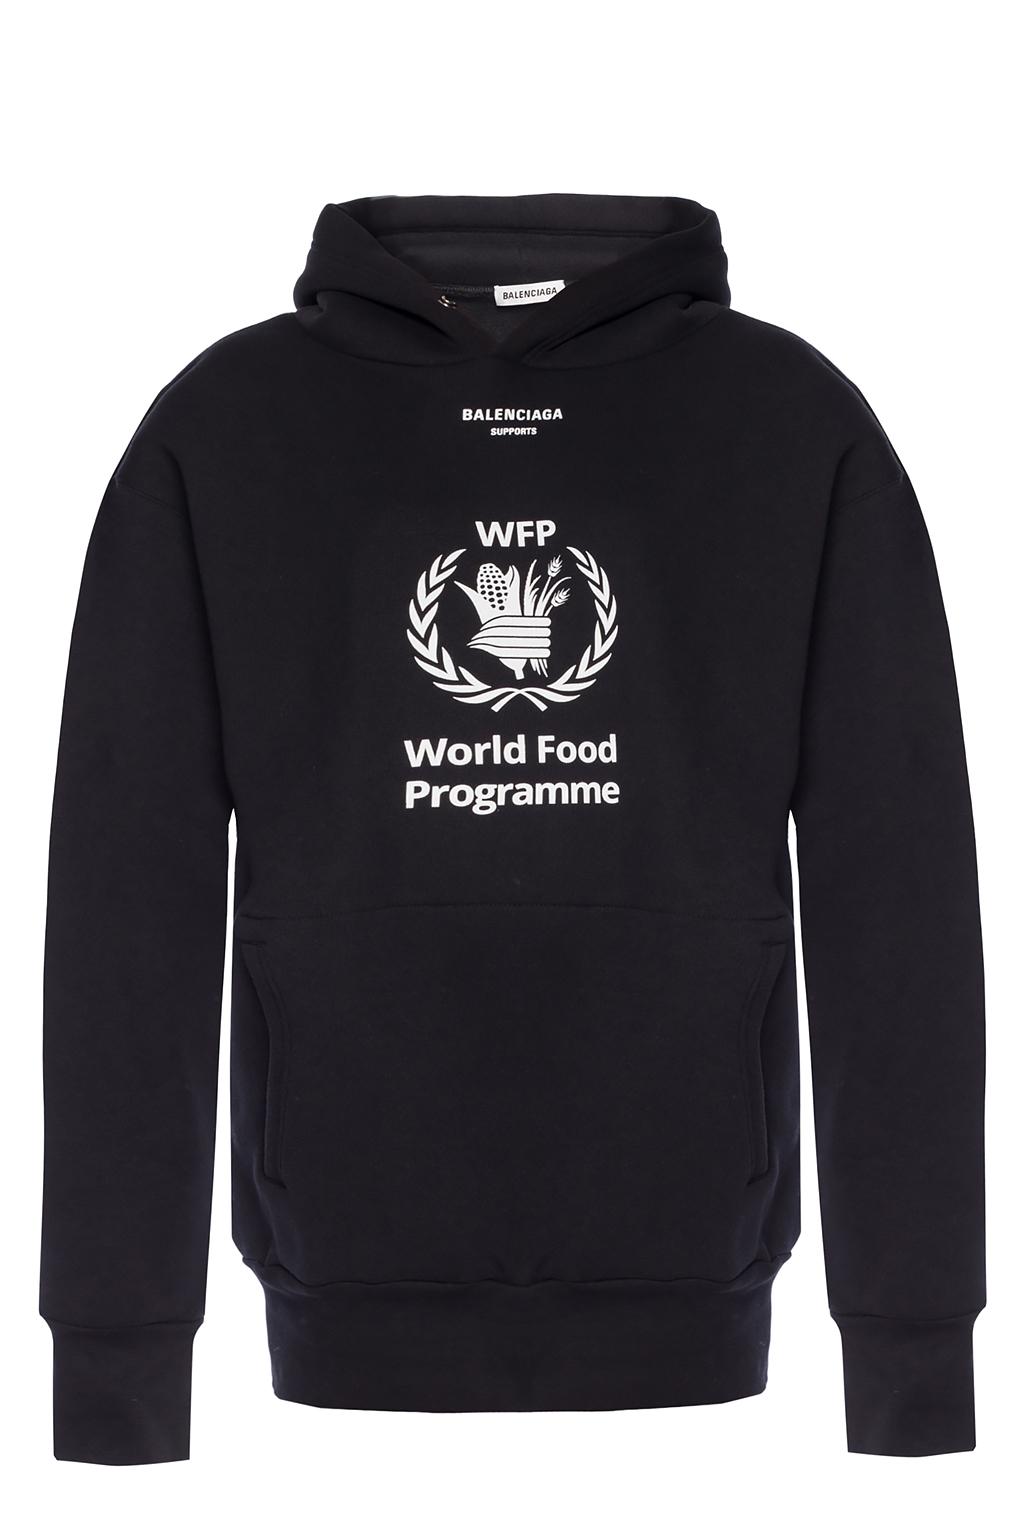 balenciaga world food programme